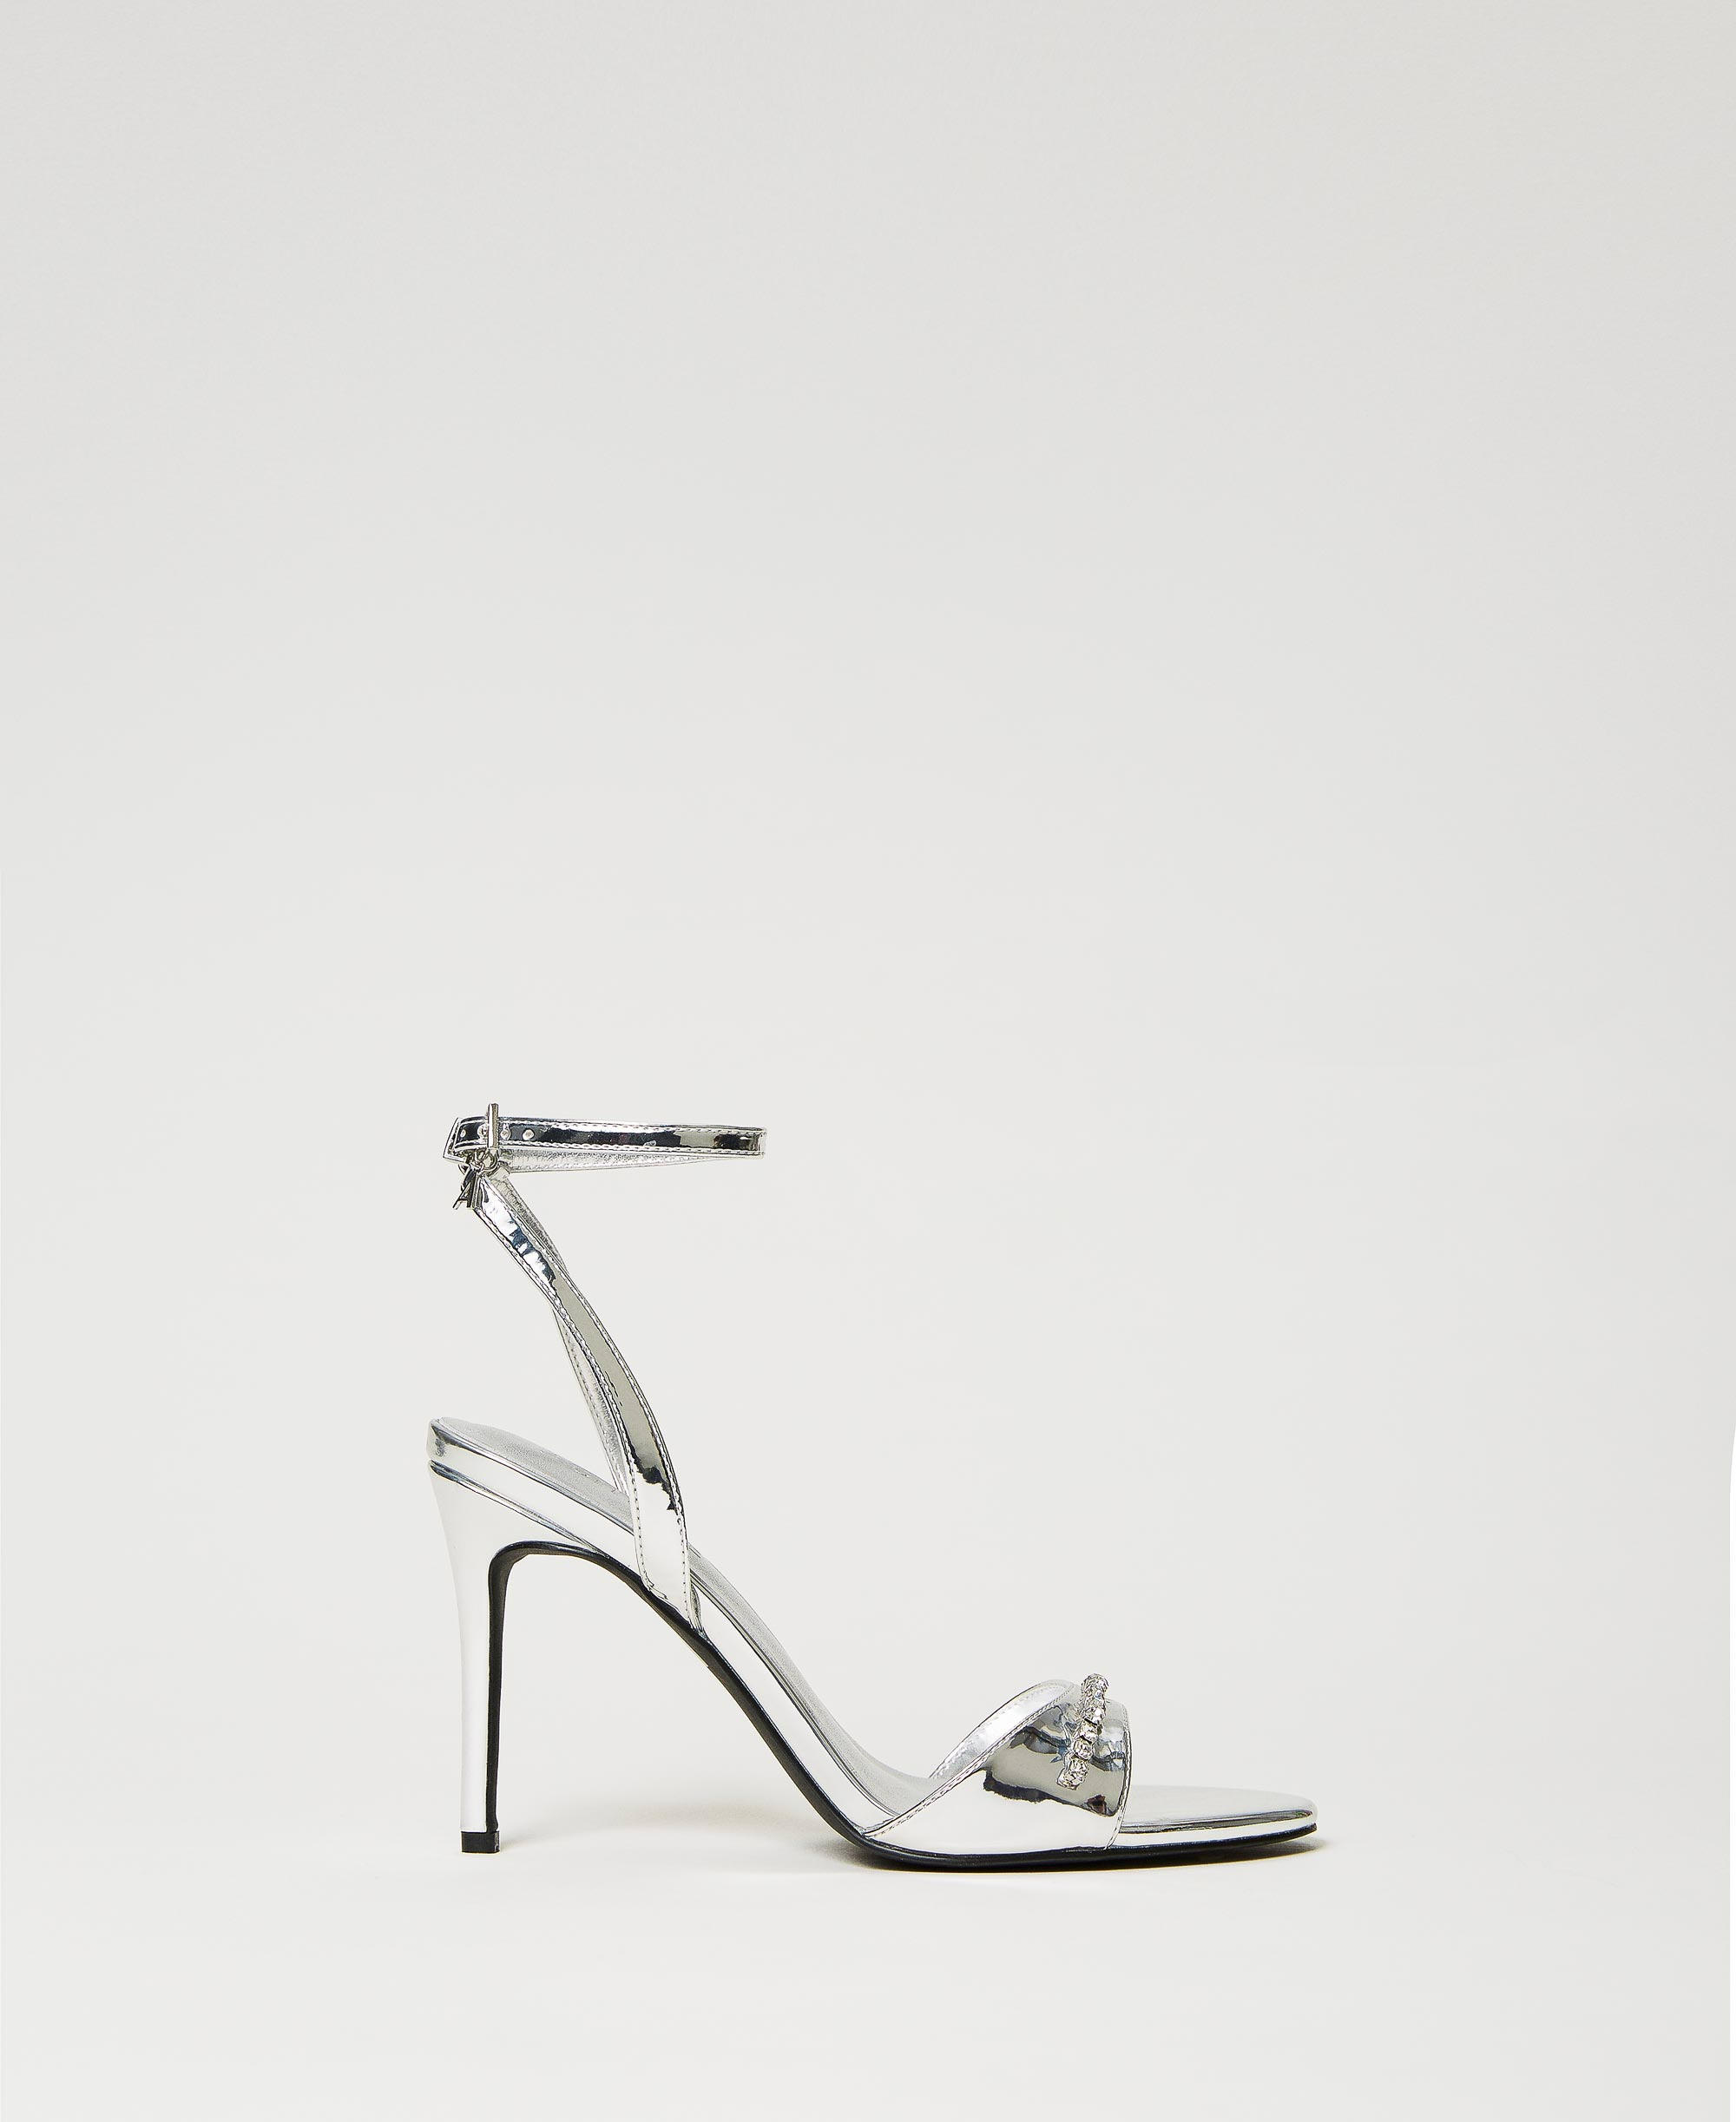 High-heeled sandals with rhinestones